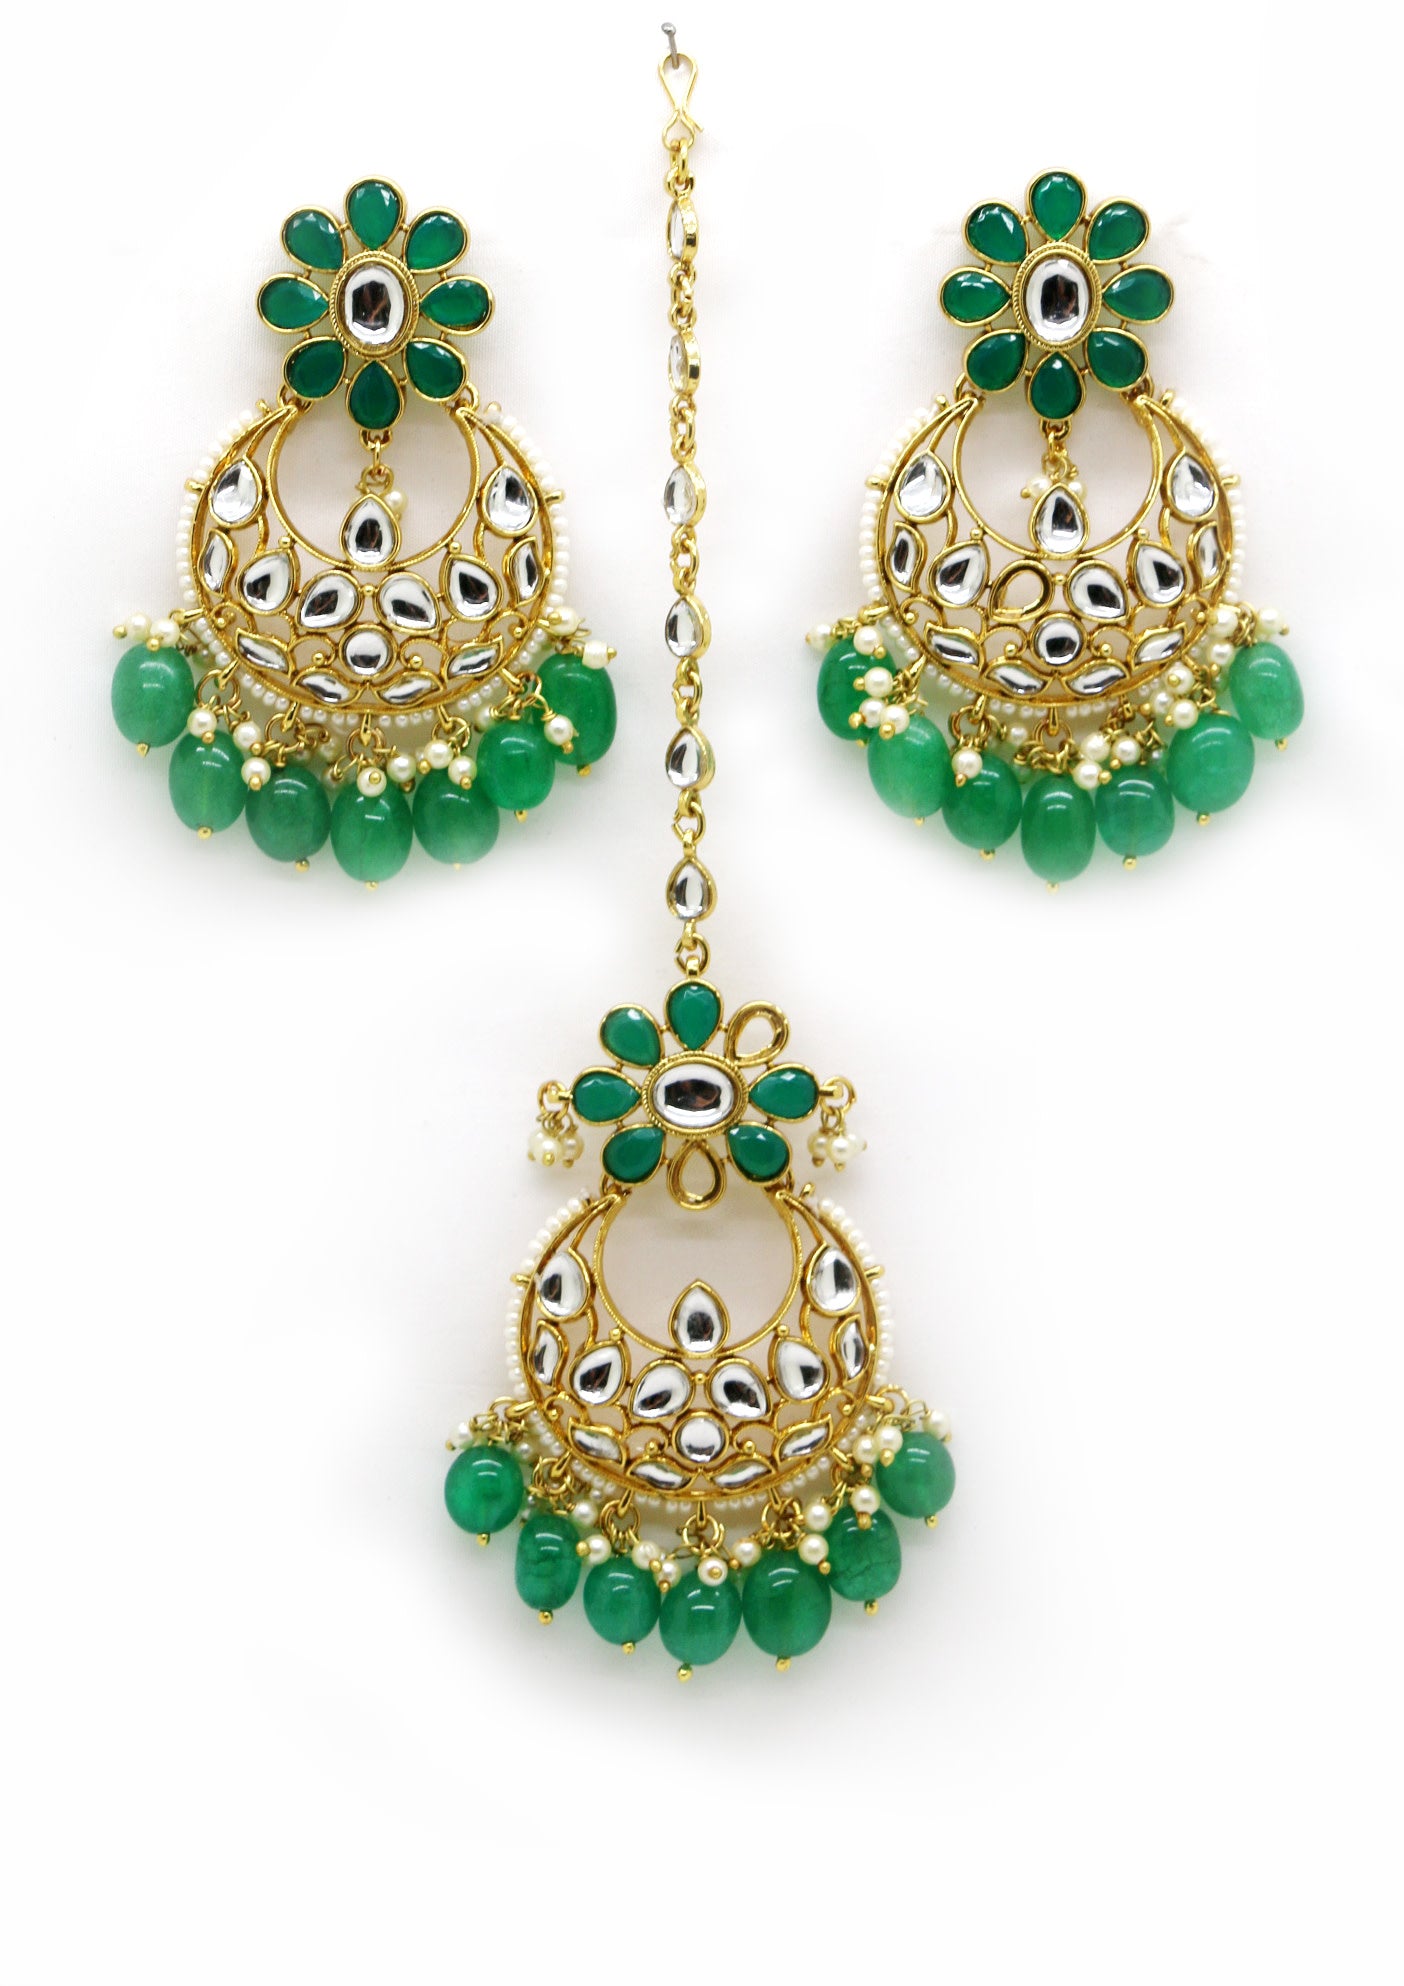 D.Green necklace set